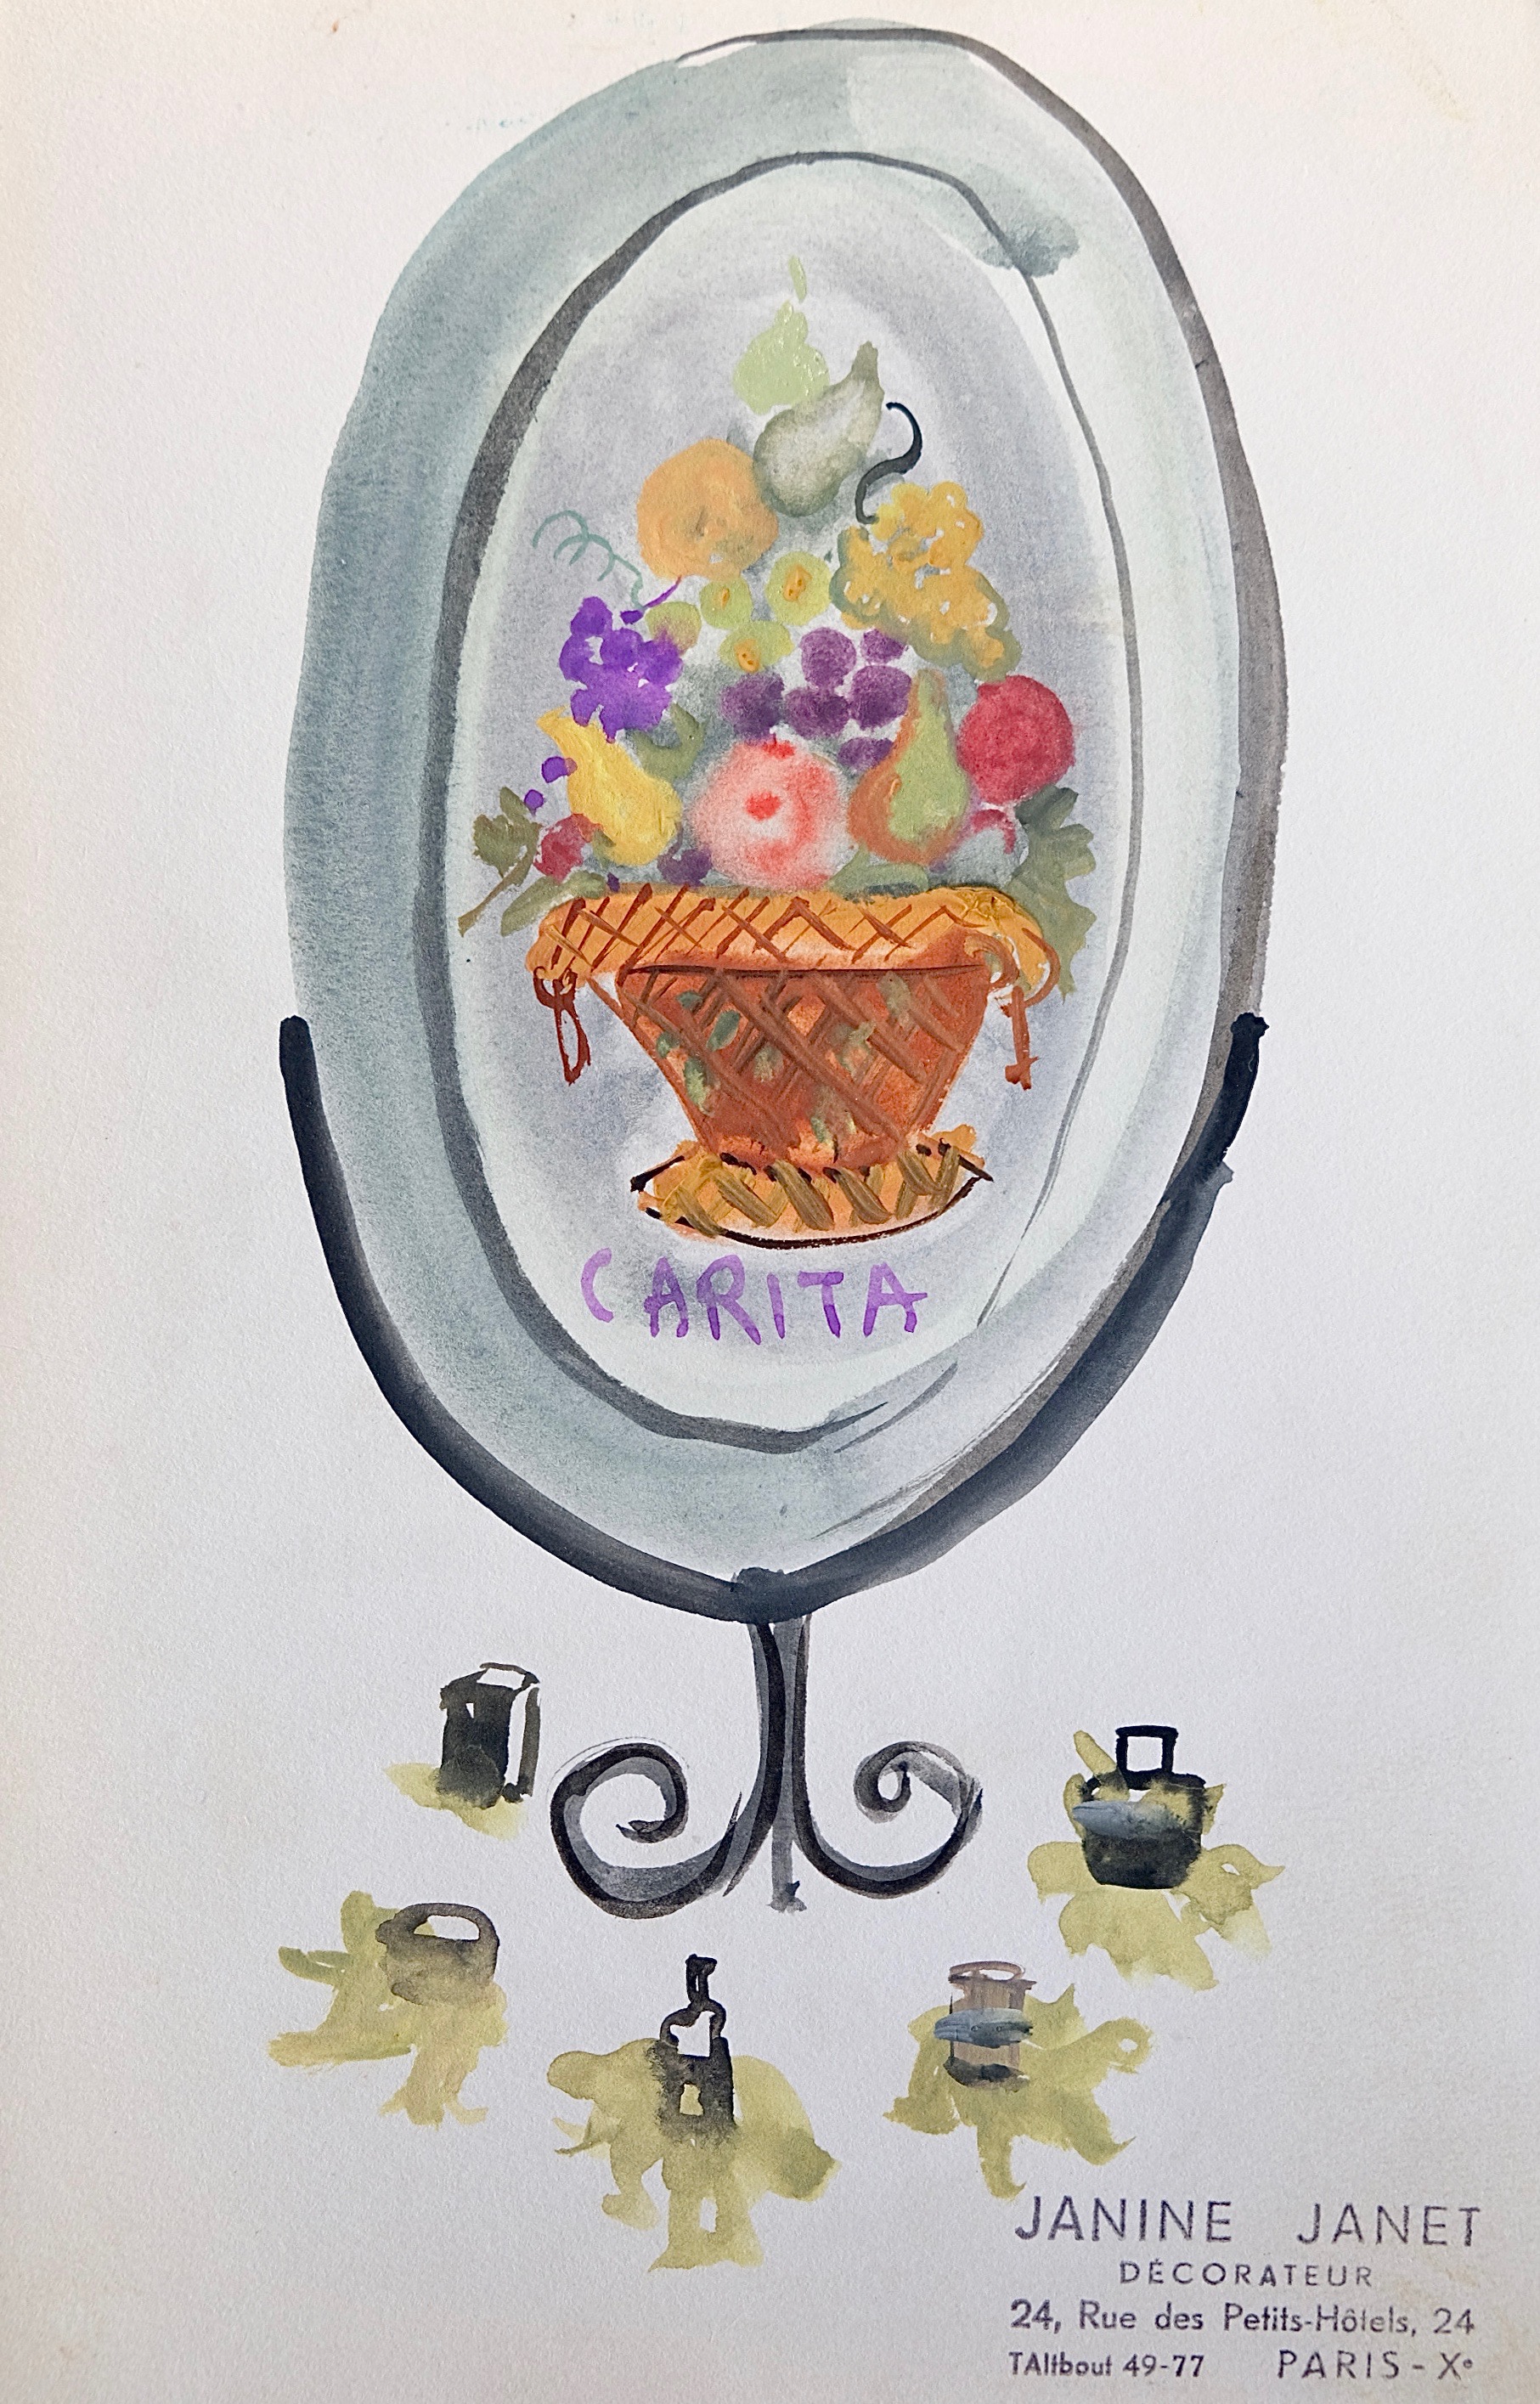 Janine JANET - Original painting - Watercolor - Project for Carita 2